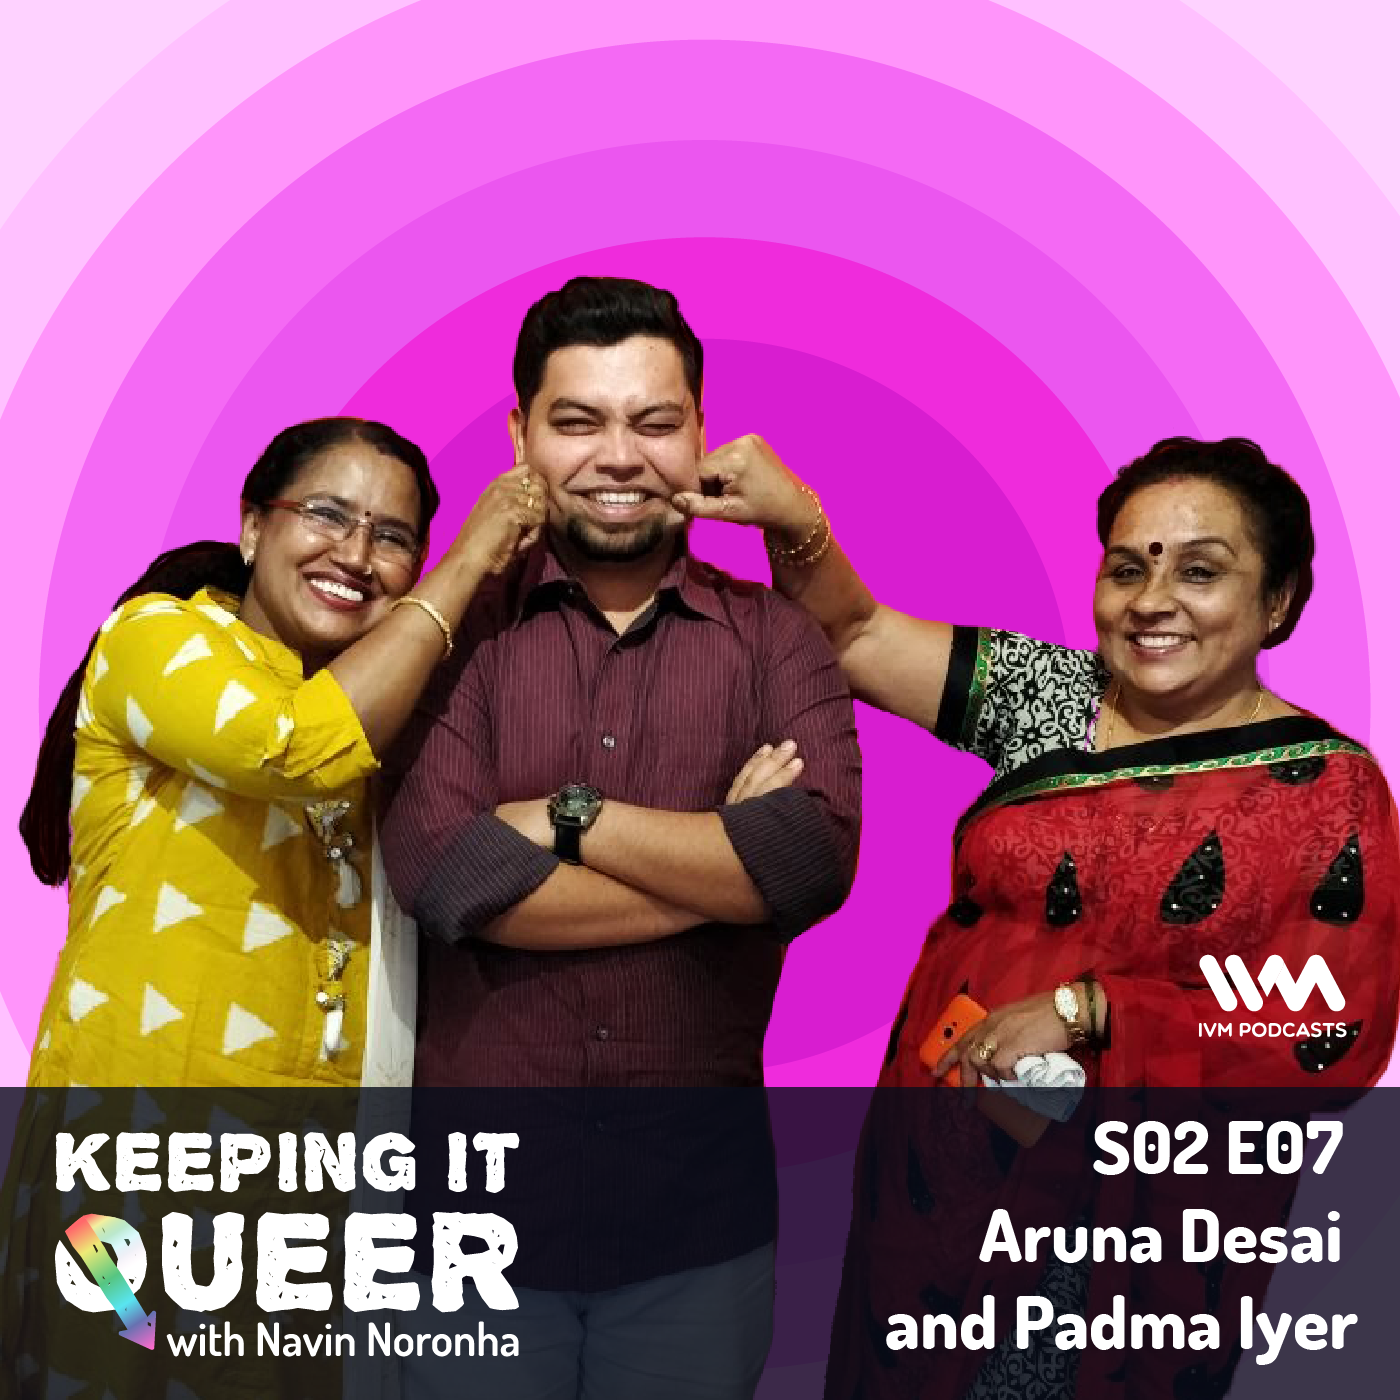 S02 E07: Aruna Desai and Padma Iyer